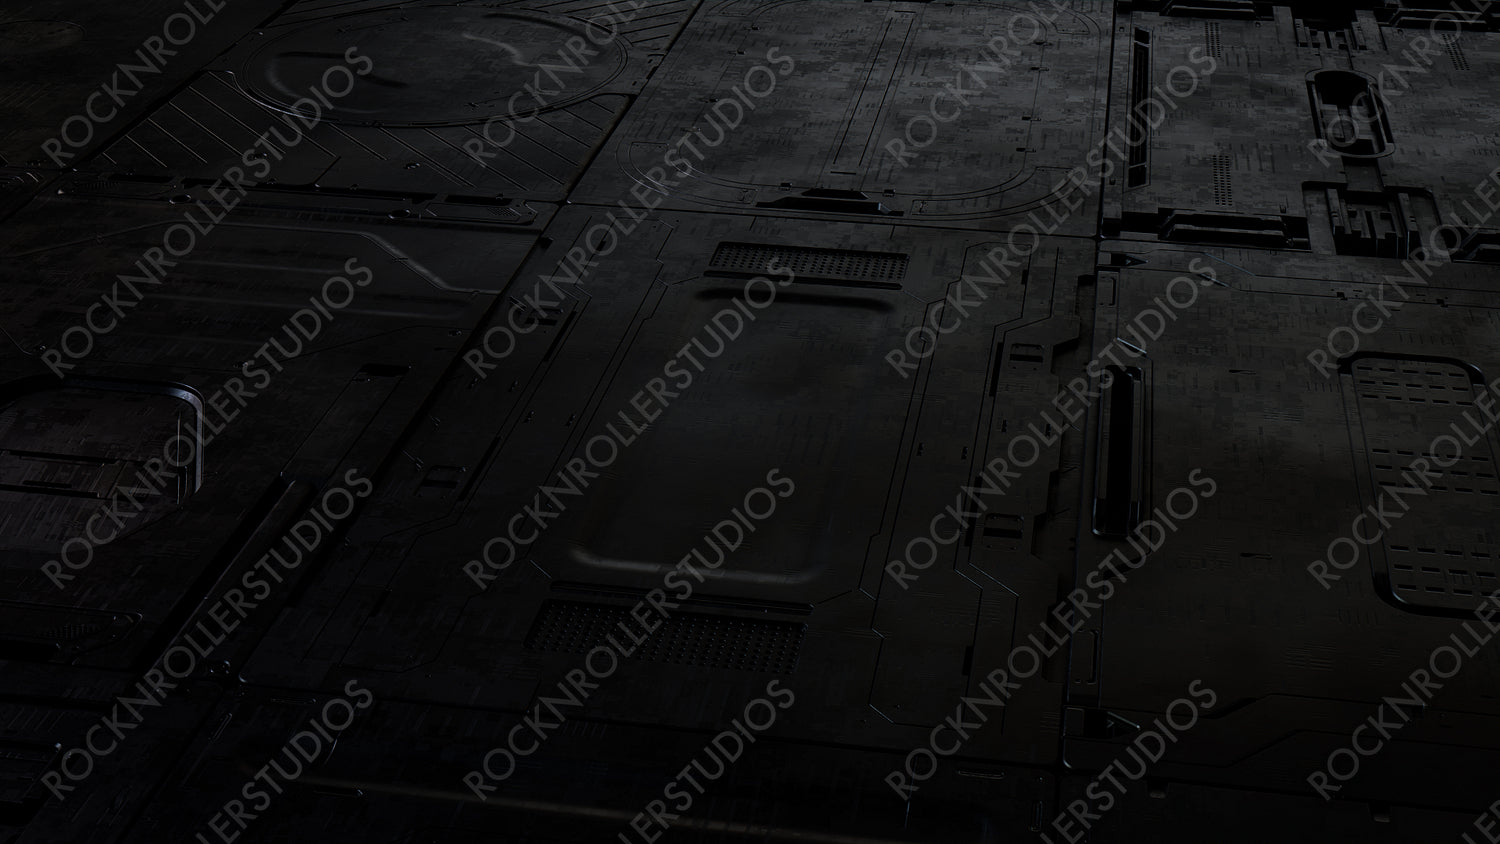 Black, Tech Wallpaper with Sci-Fi 3D Panels. Dark, Futuristic style. 3D Render.